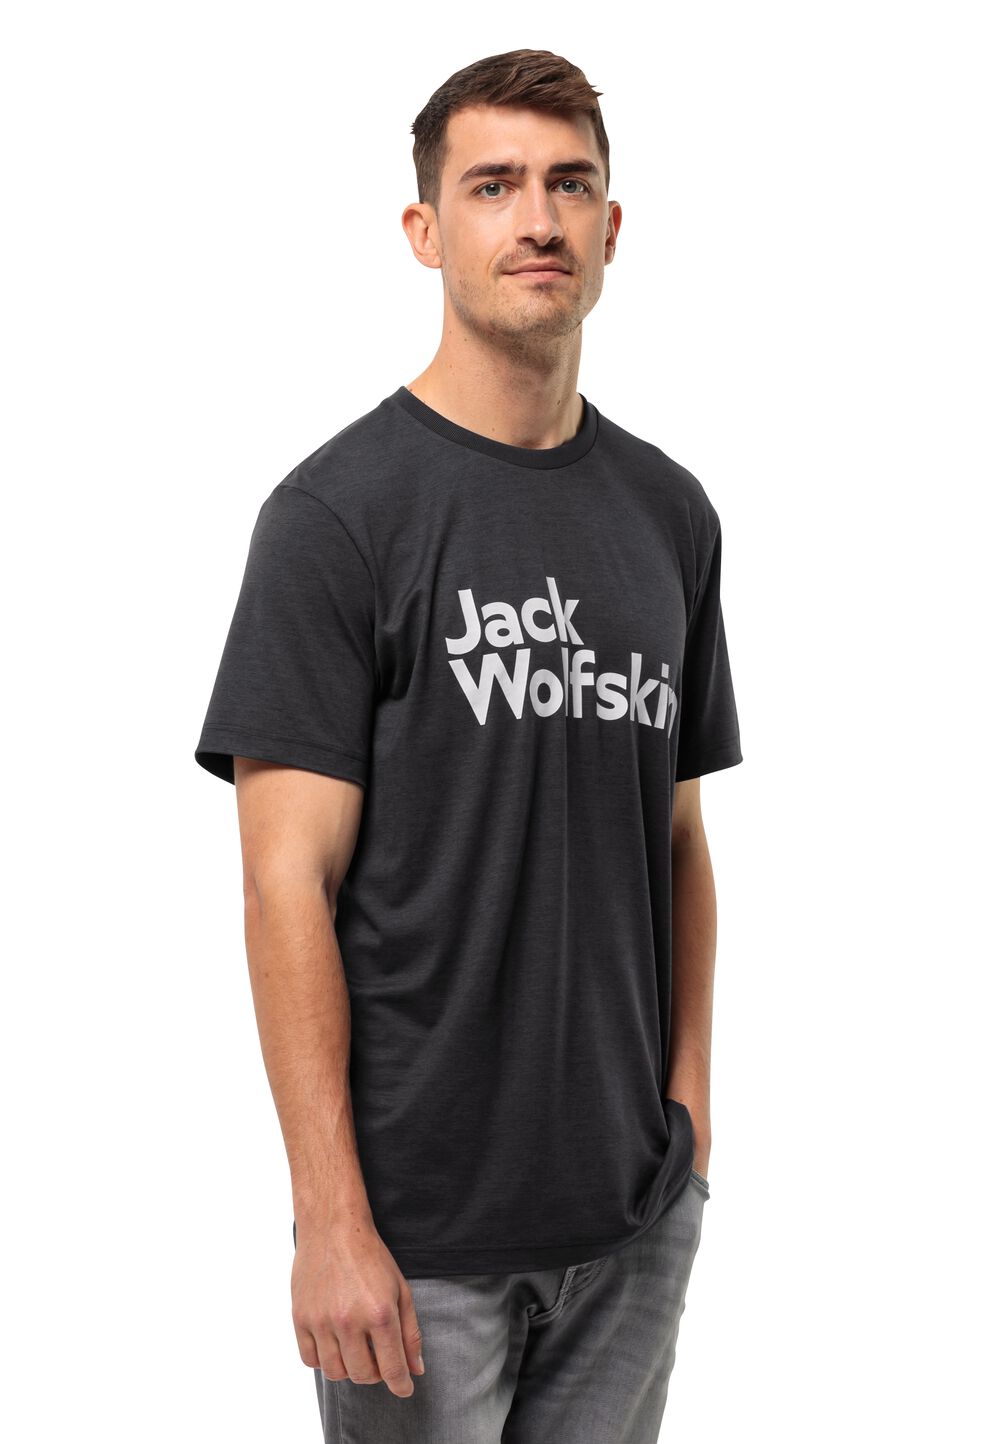 Jack Wolfskin Brand T-Shirt Men Functioneel shirt Heren XXL zwart black